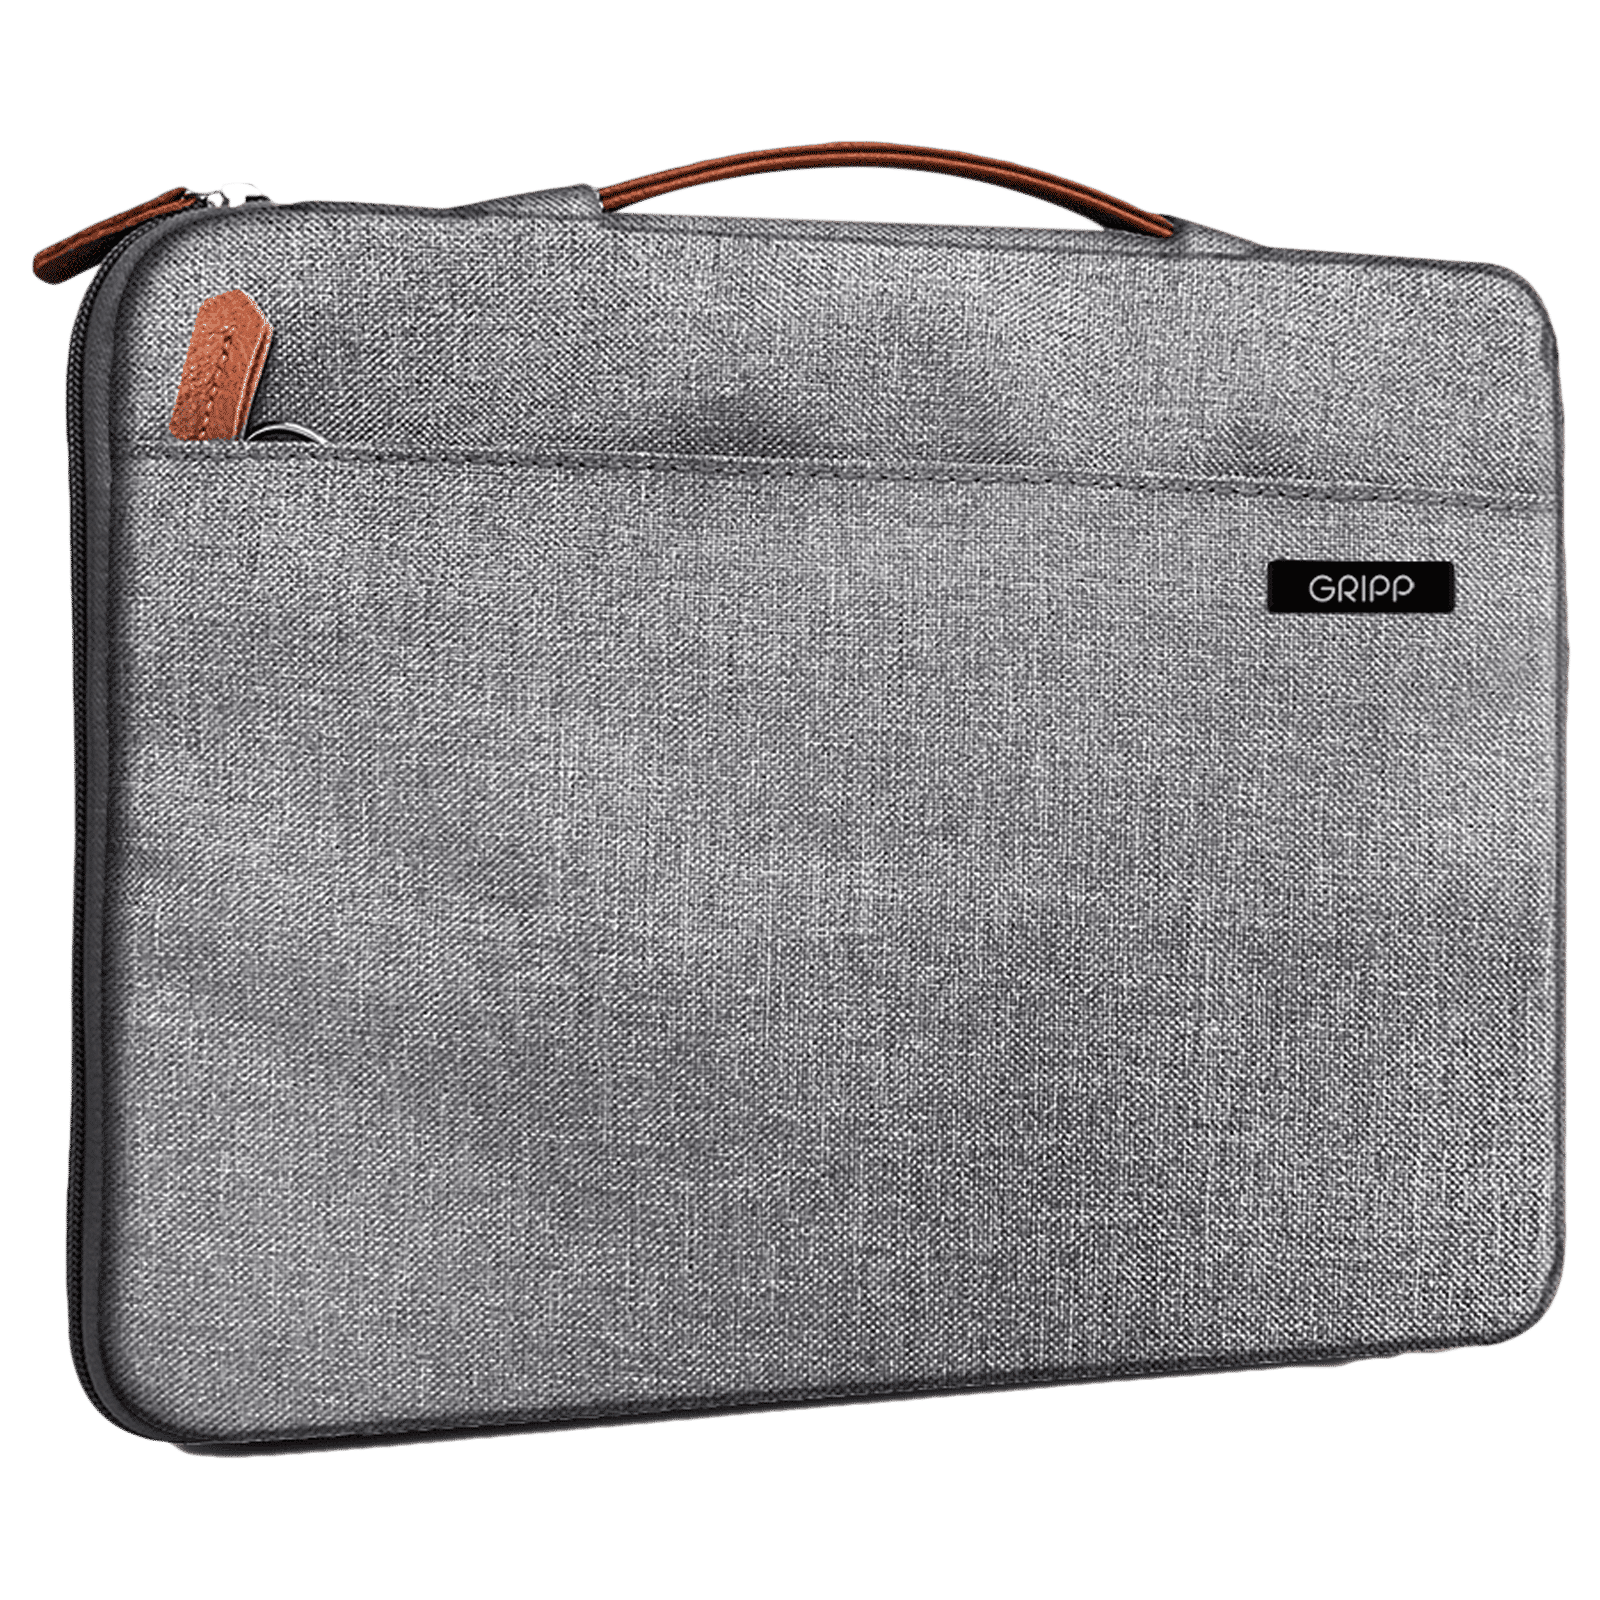 Buy Probus Dual Tone Laptop Slim Sleeve Bag for 13.3 Inch  Laptop/MacBook/Chromebook - Black at Amazon.in